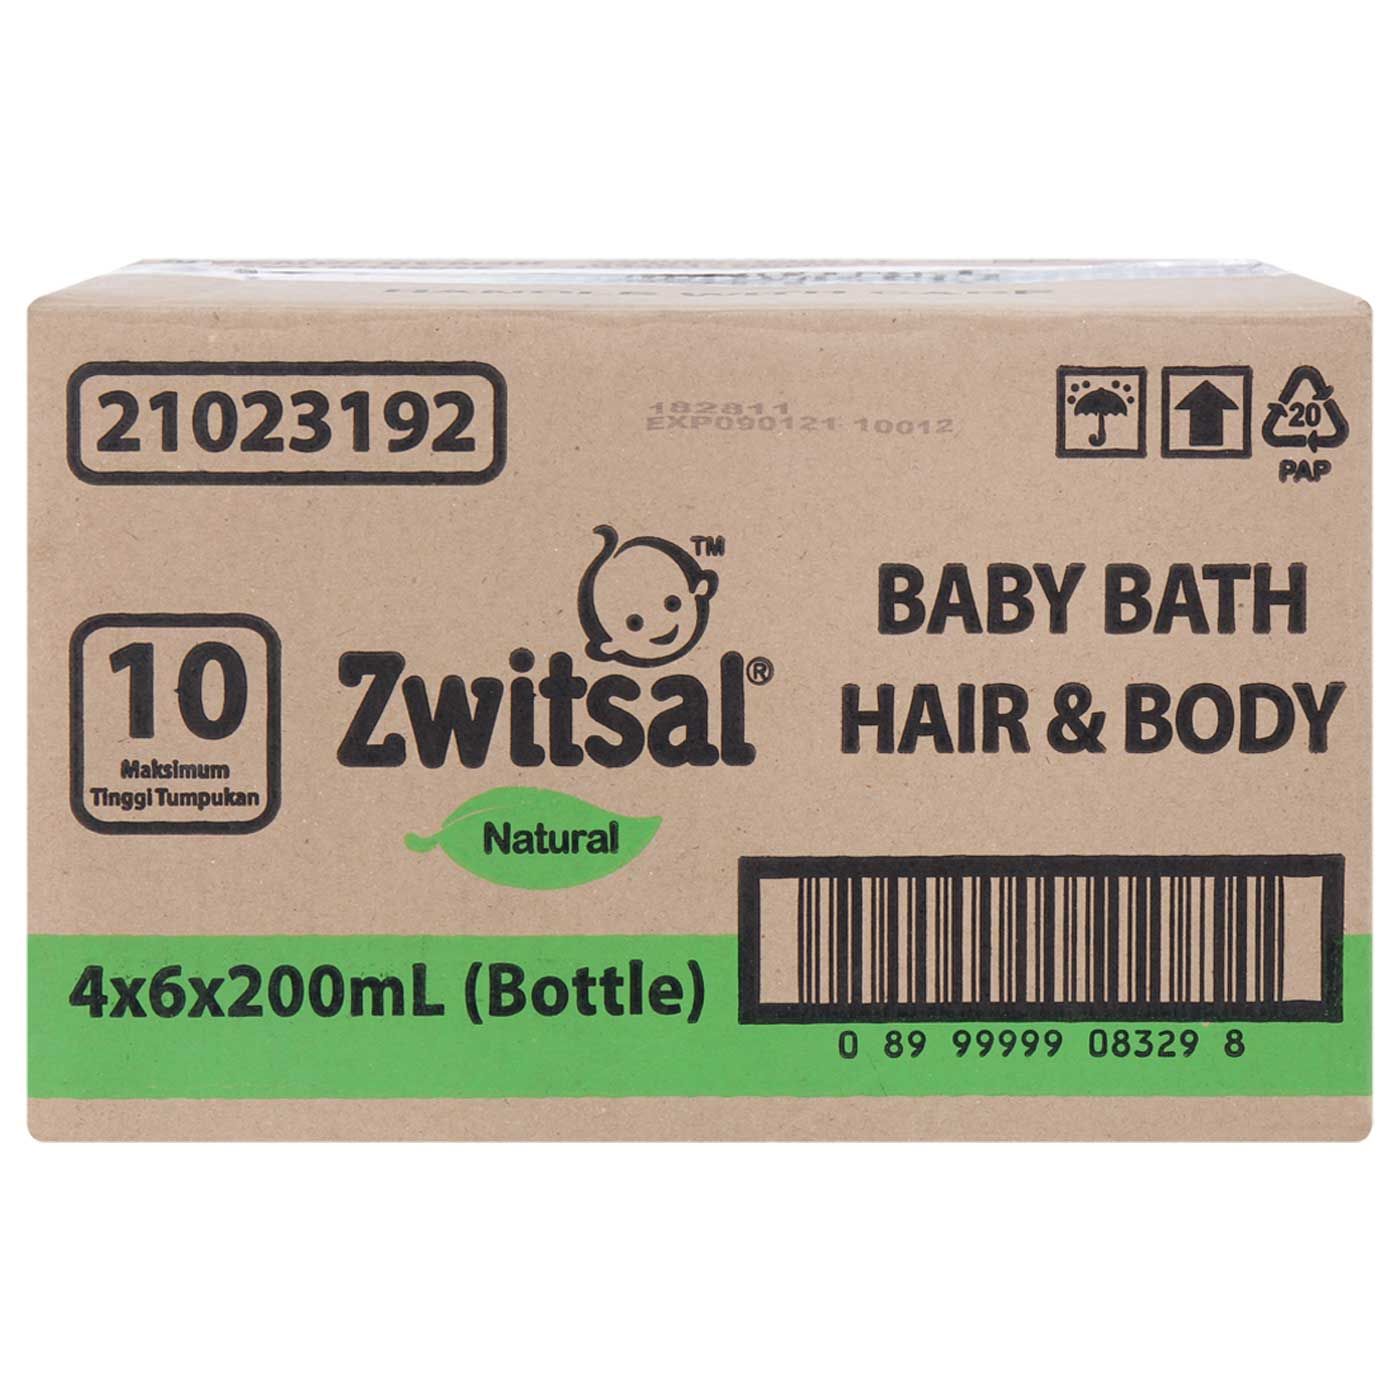 Zwitsal Natural Baby Bath Hair & Body 200Ml - 4